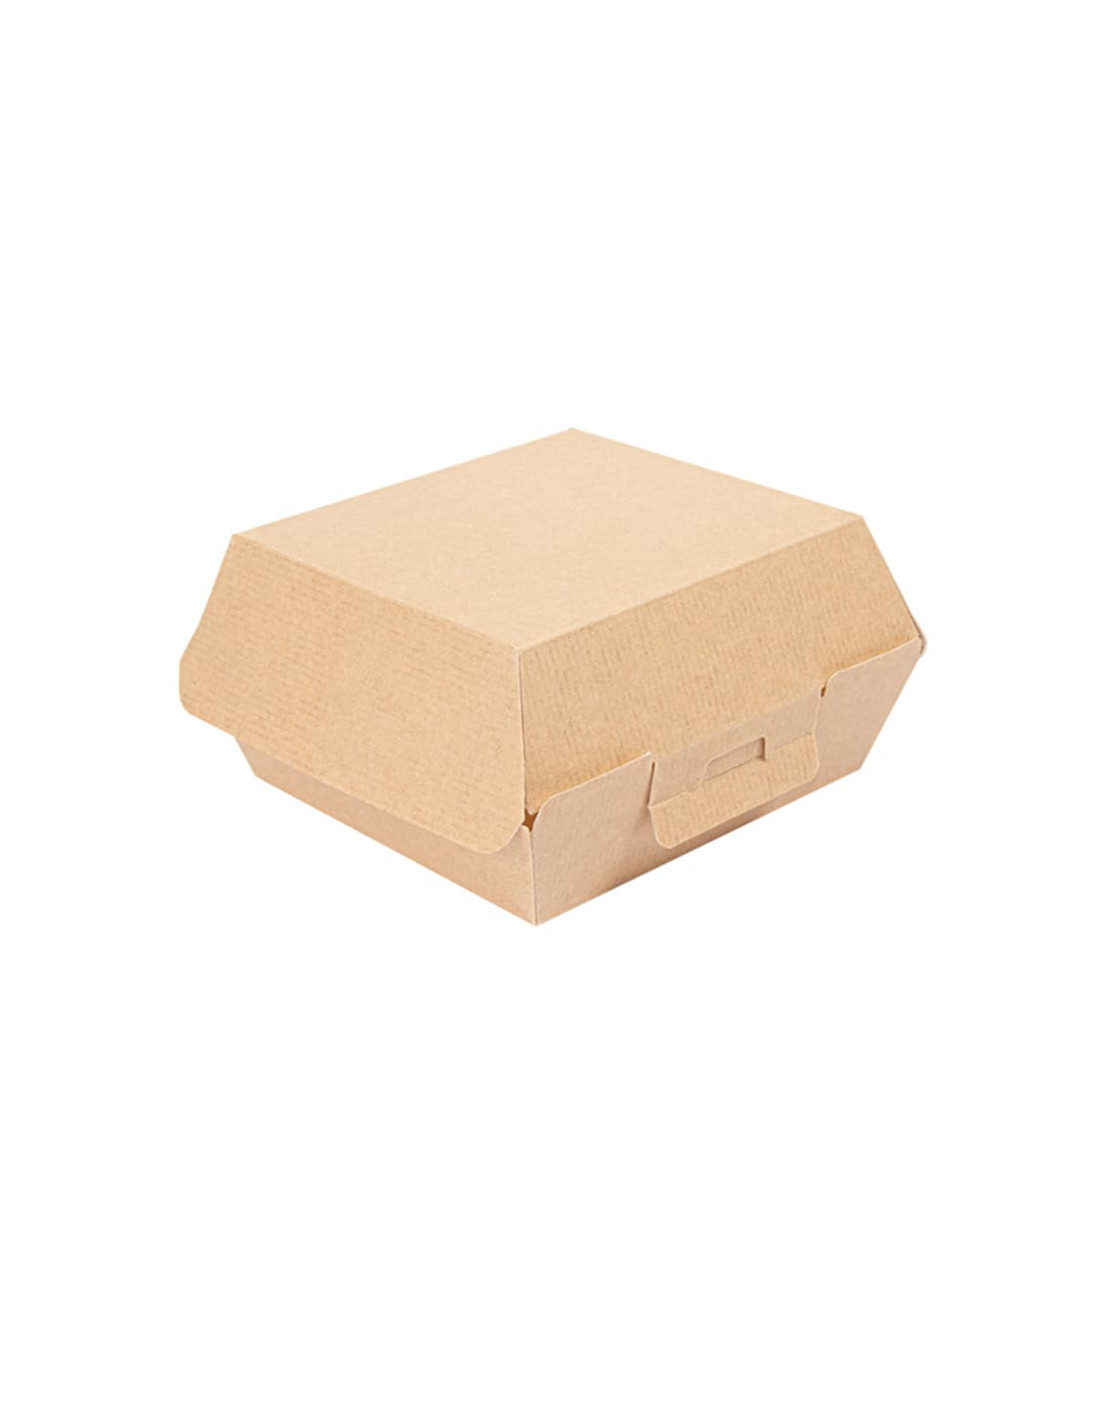 Boite burger en kraft 14x12,5x5,5 cm - Achat / Vente discount | WE Packing